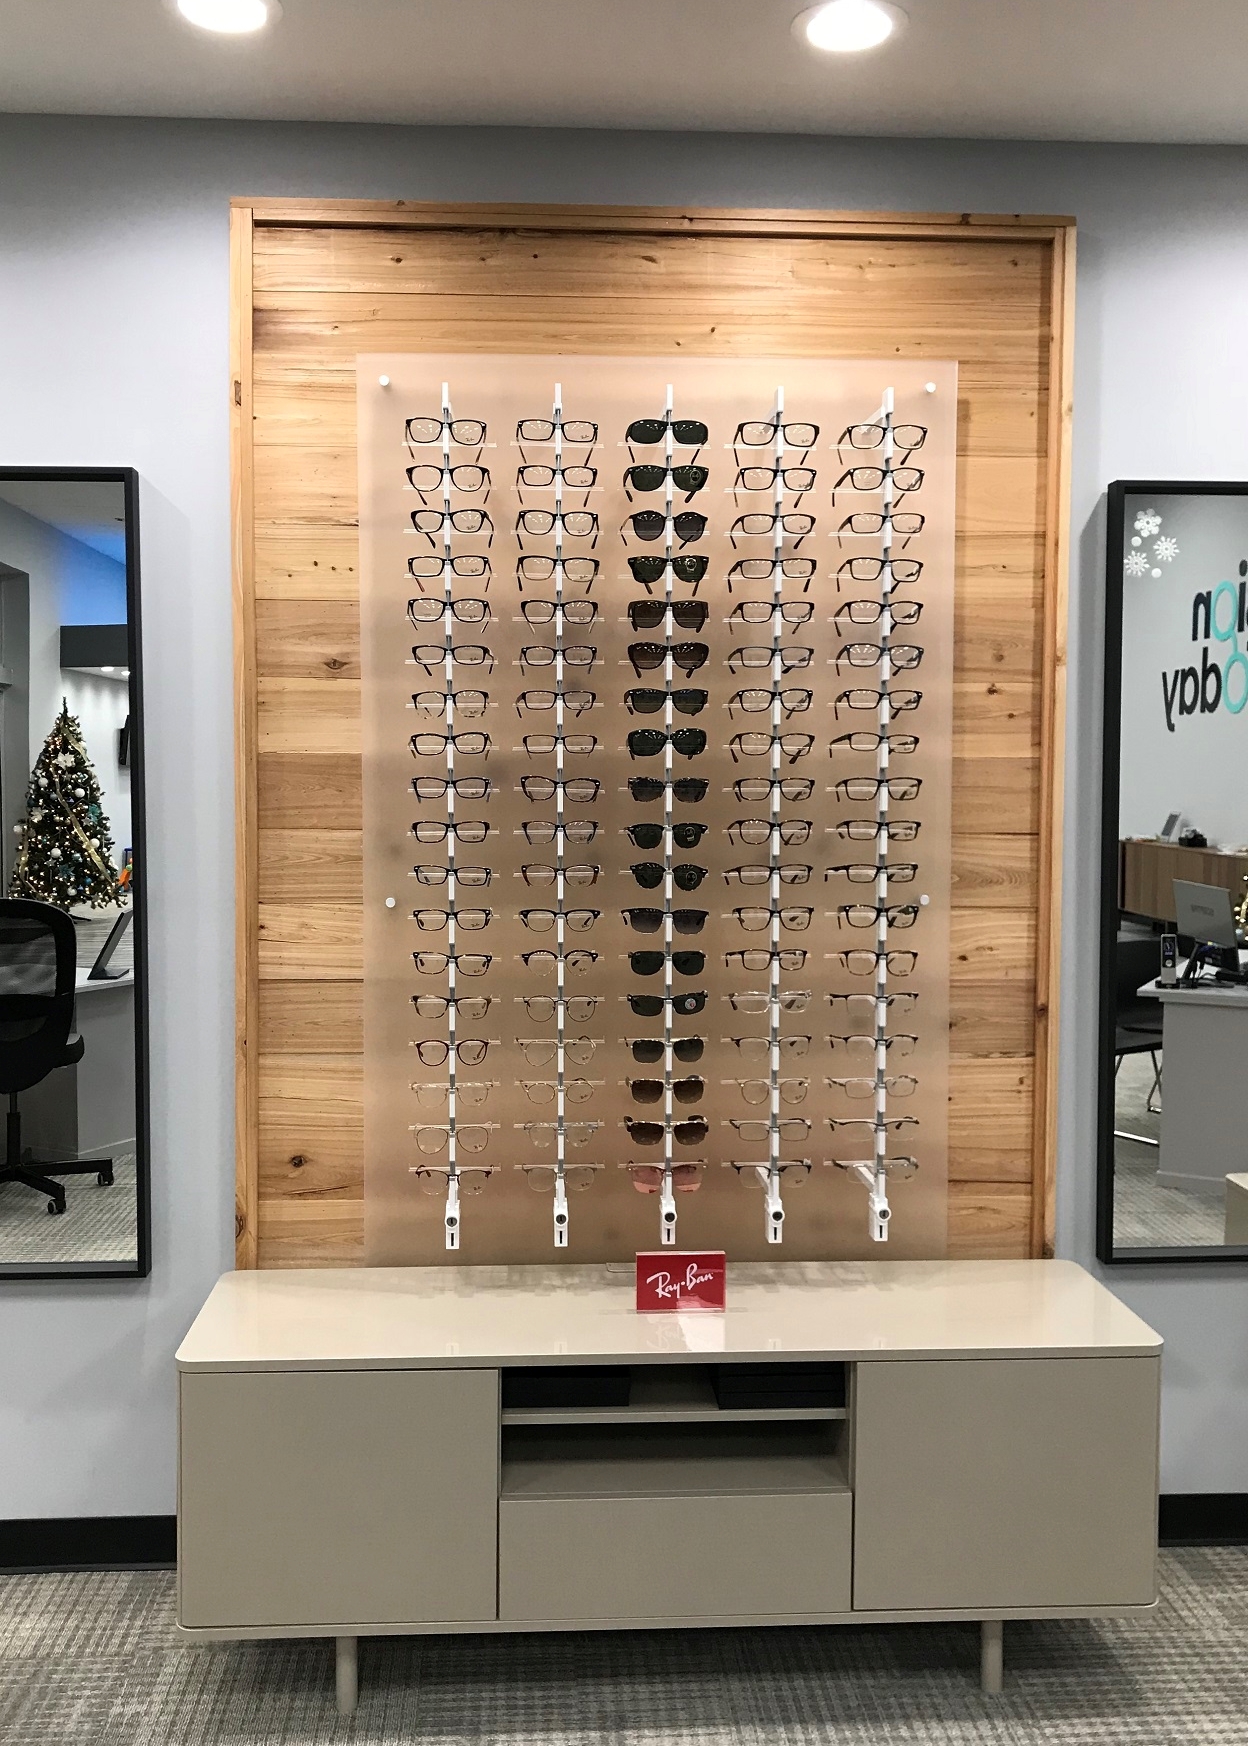 RayBan eyeglass display